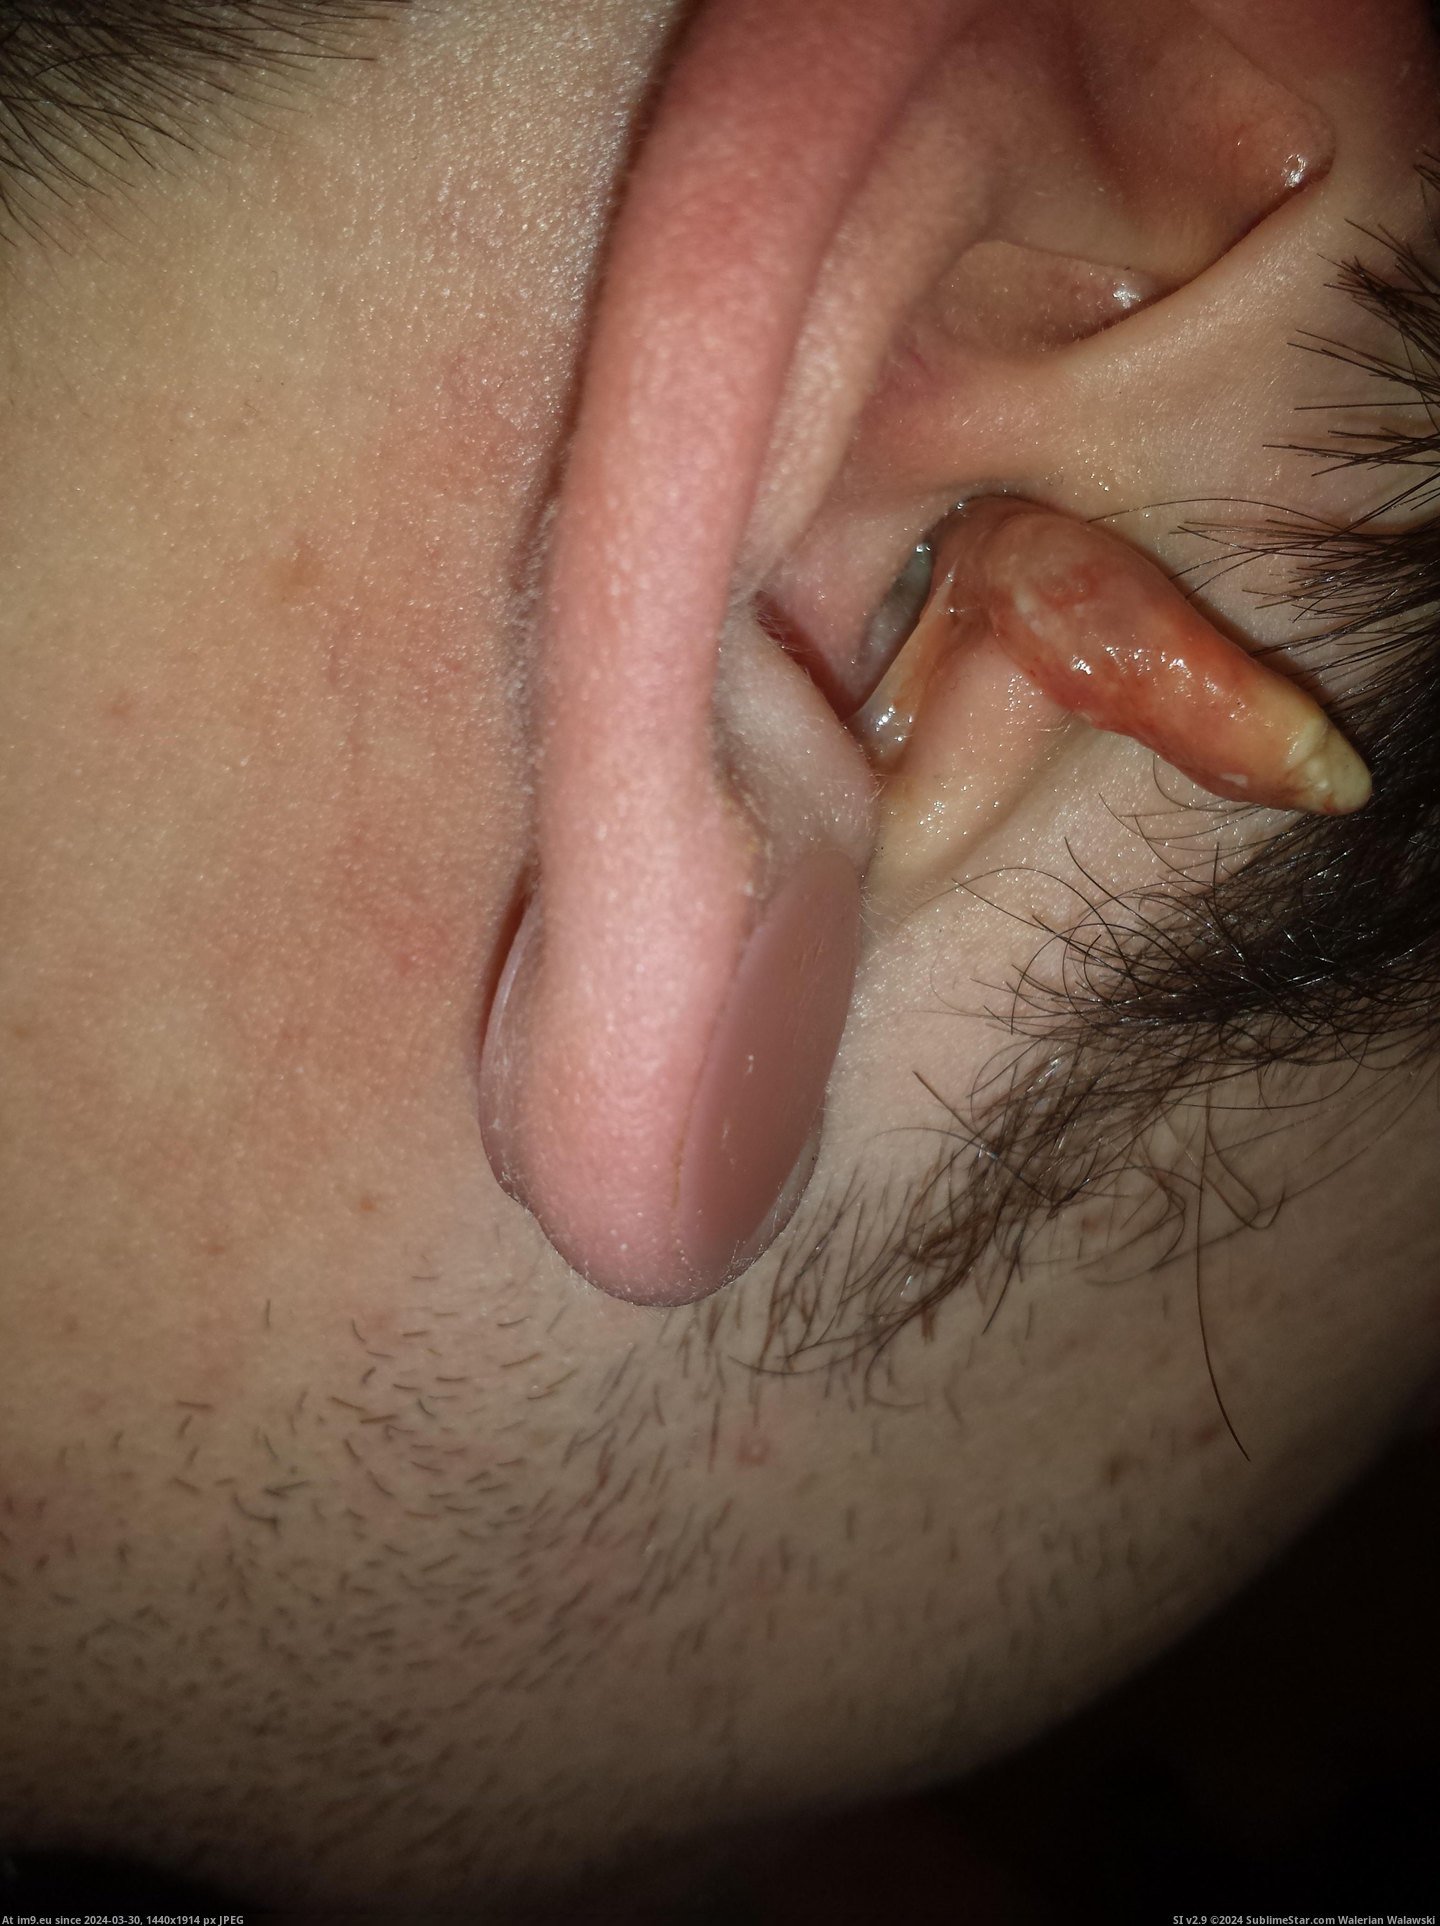 #Wtf #Ear #Infection #Crazy [Wtf] My crazy ear infection 6 Pic. (Obraz z album My r/WTF favs))